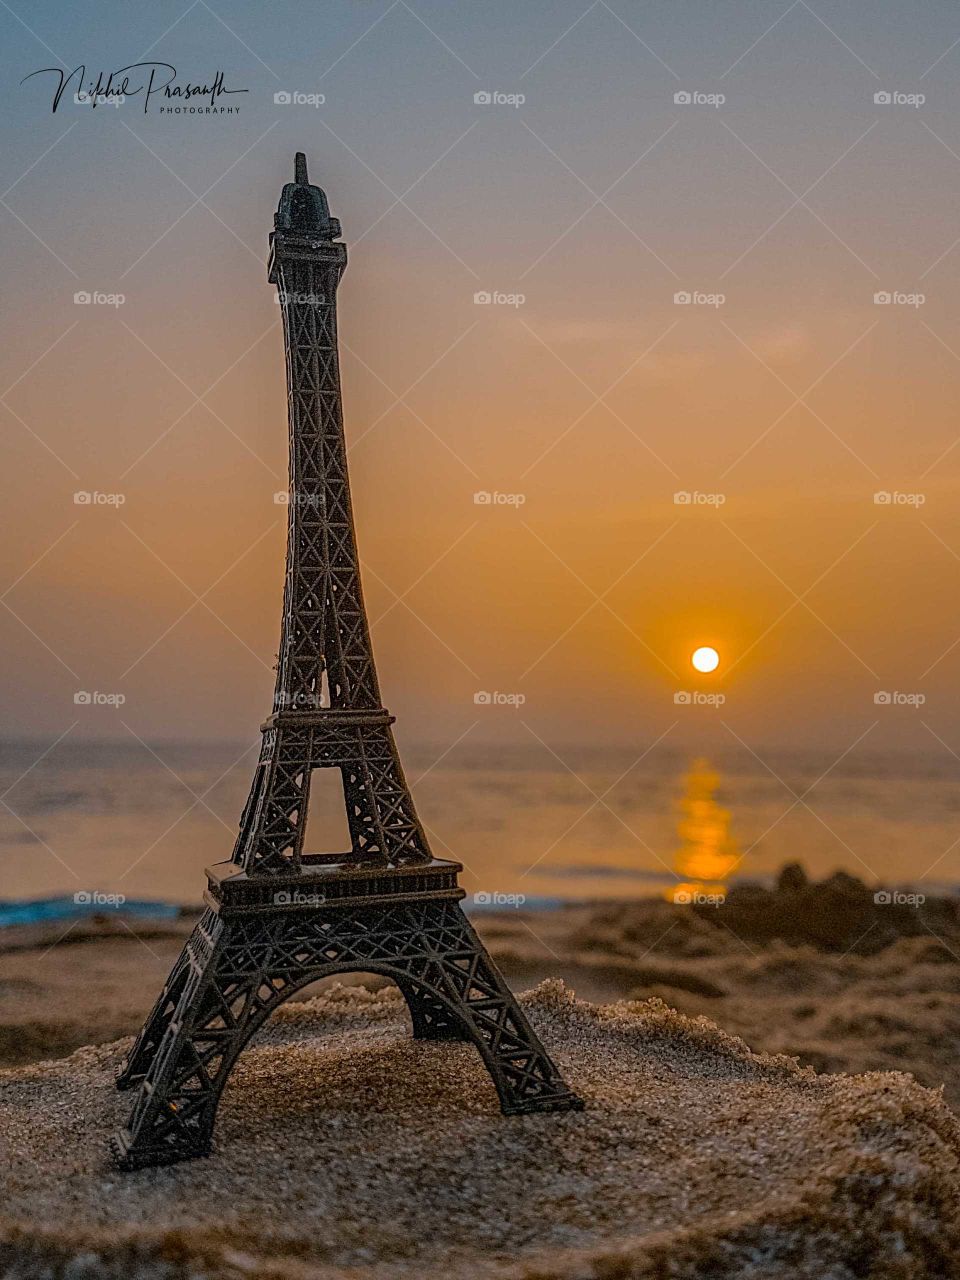 A Miniature Model of Eiffel Tower.. Shot during sunset at Varkala Beach, Kerala, India